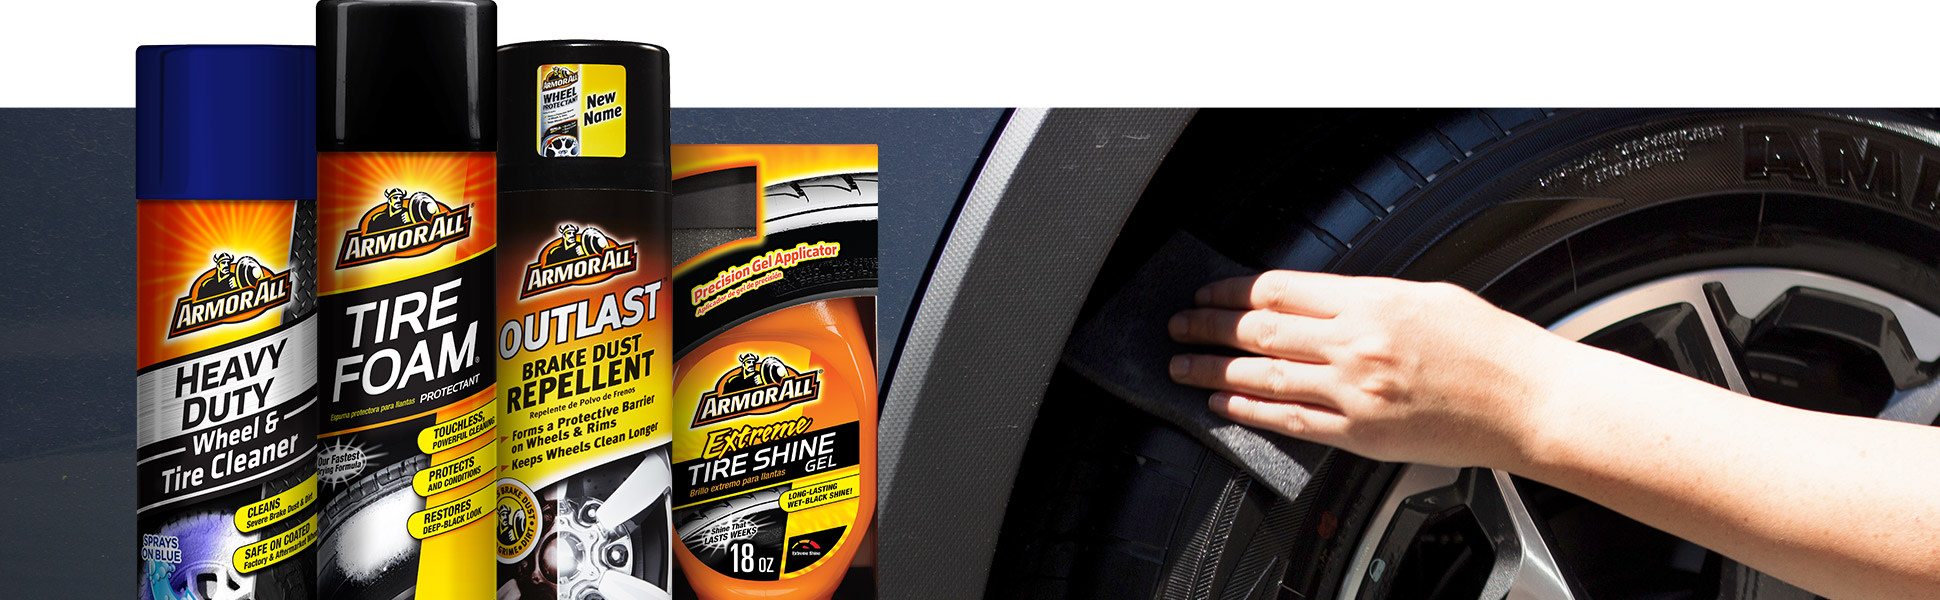 Armor All 22 oz. Extreme Tire Shine Spray 78004 - The Home Depot